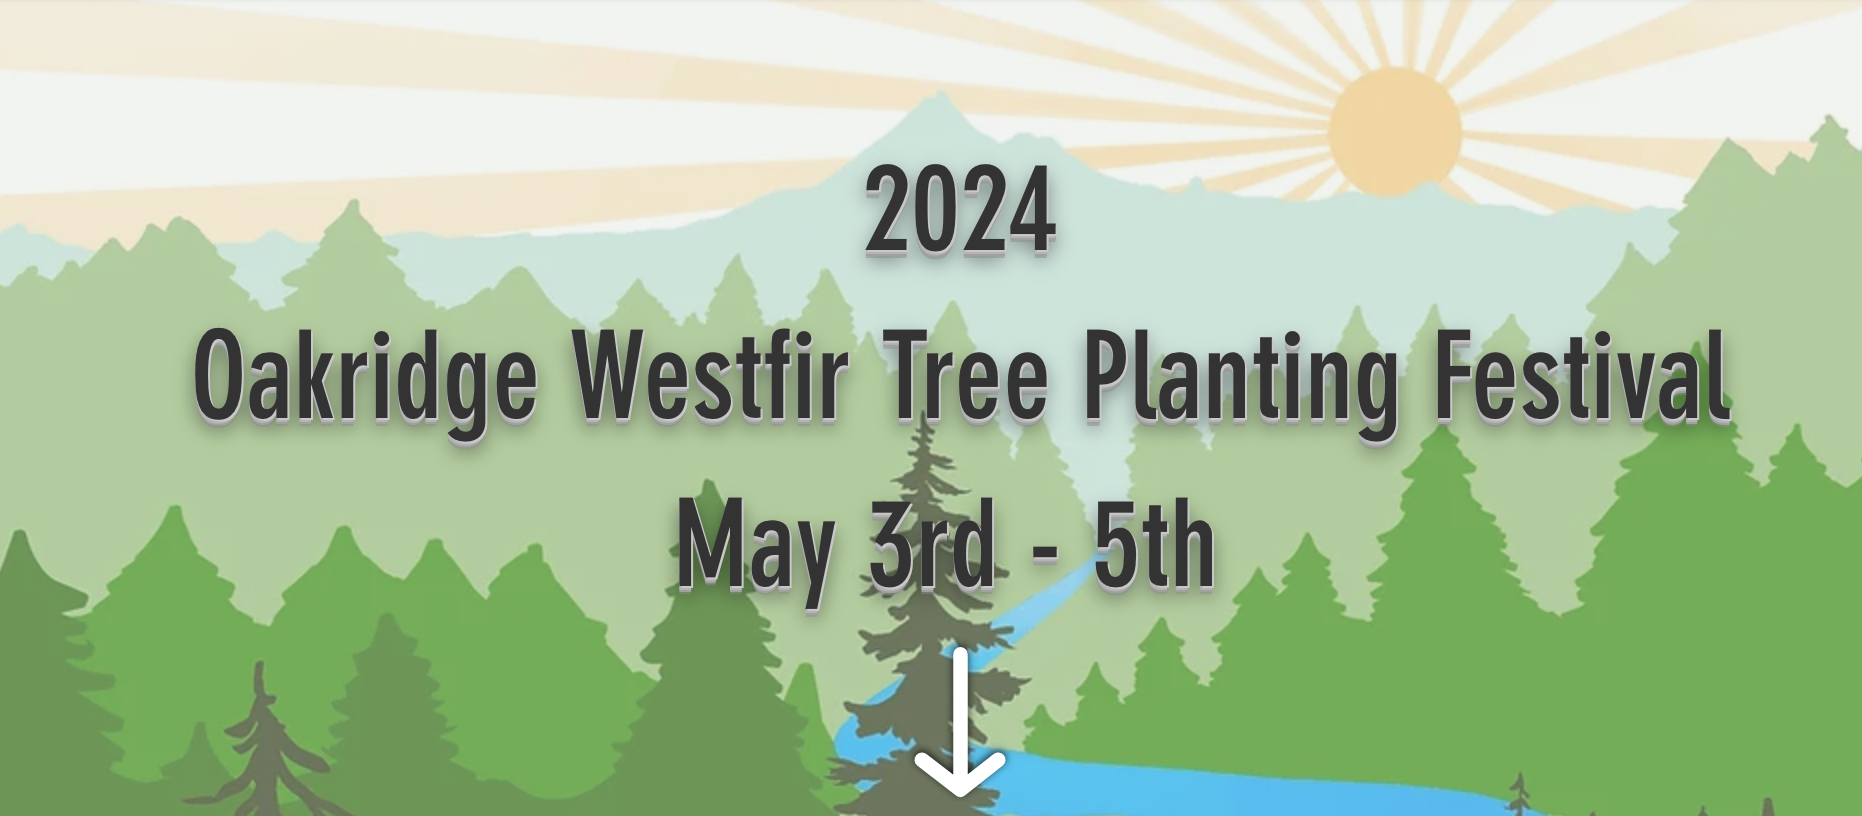 Oakridge Westfir Oregon Tree Planting Festival 2024 Annual event